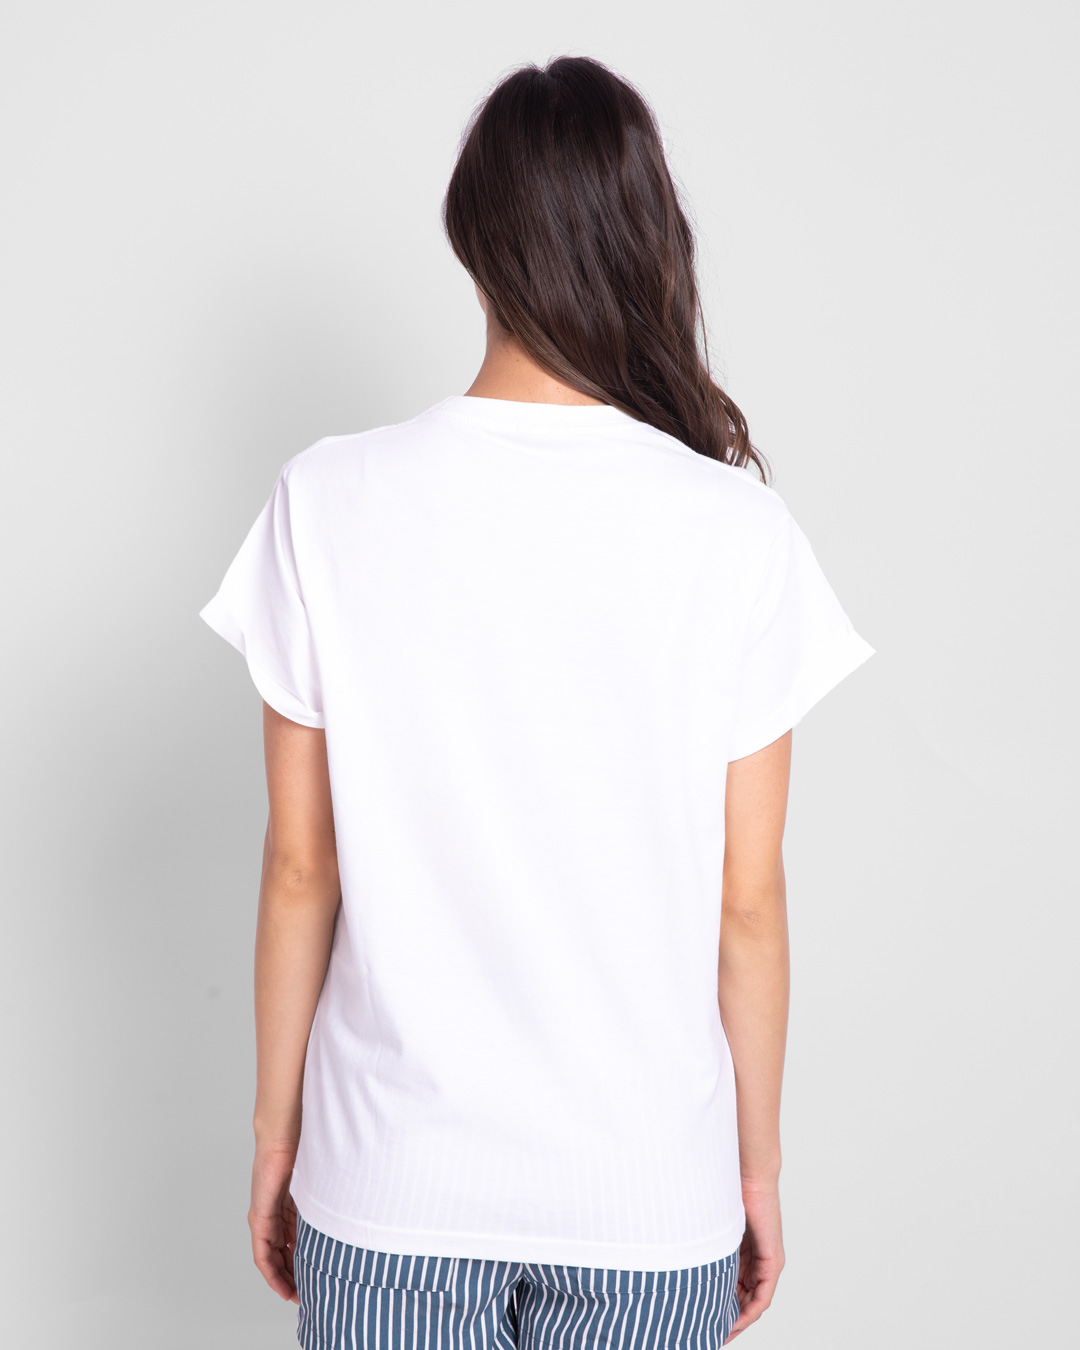 Shop Overrated Boyfriend T-Shirt (DL) White-Back